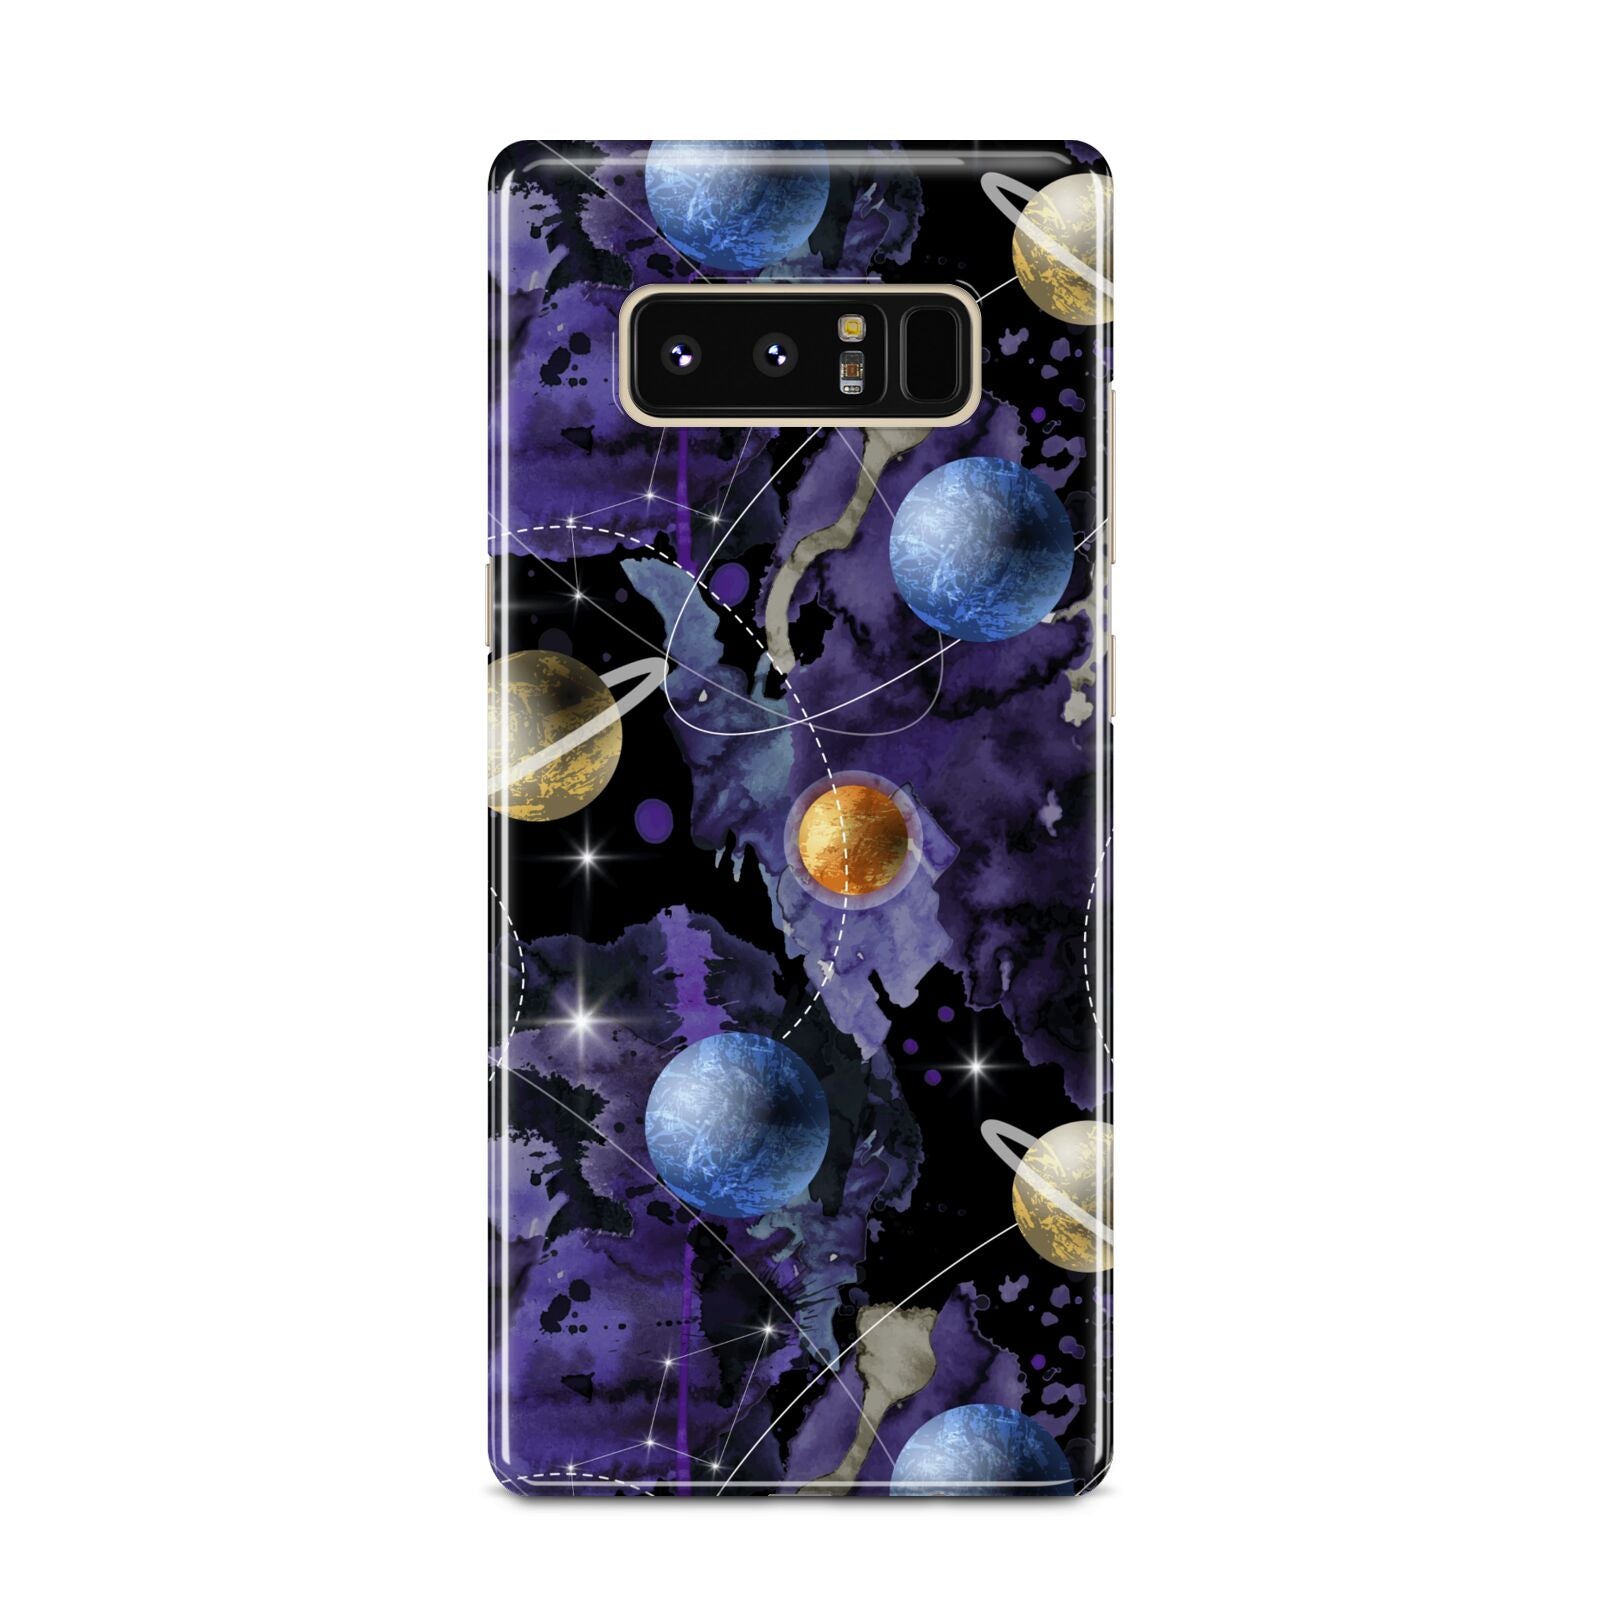 Planet Samsung Galaxy Note 8 Case